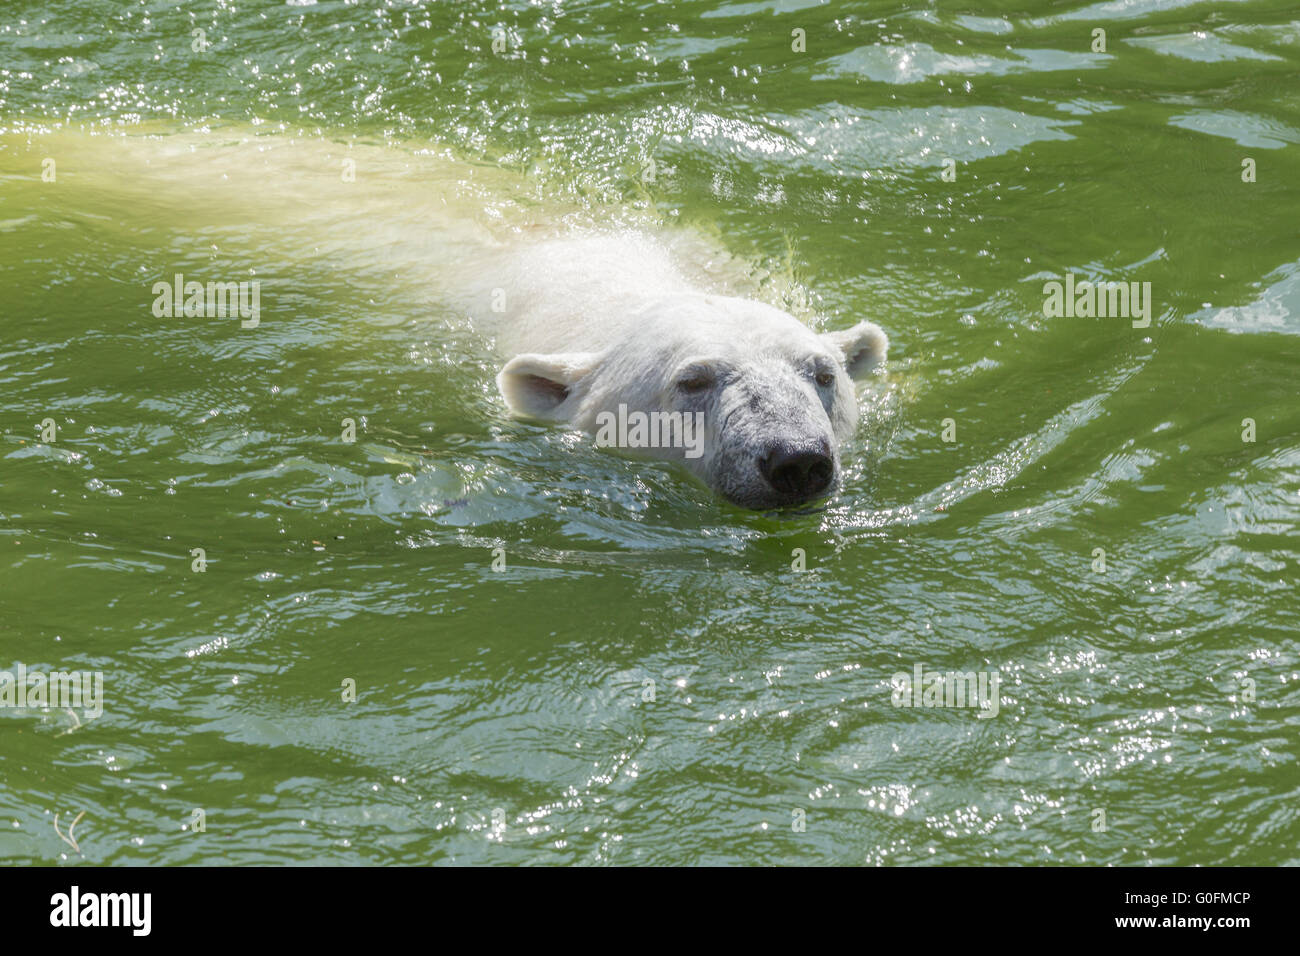 Polar bear in the water Stock Photo